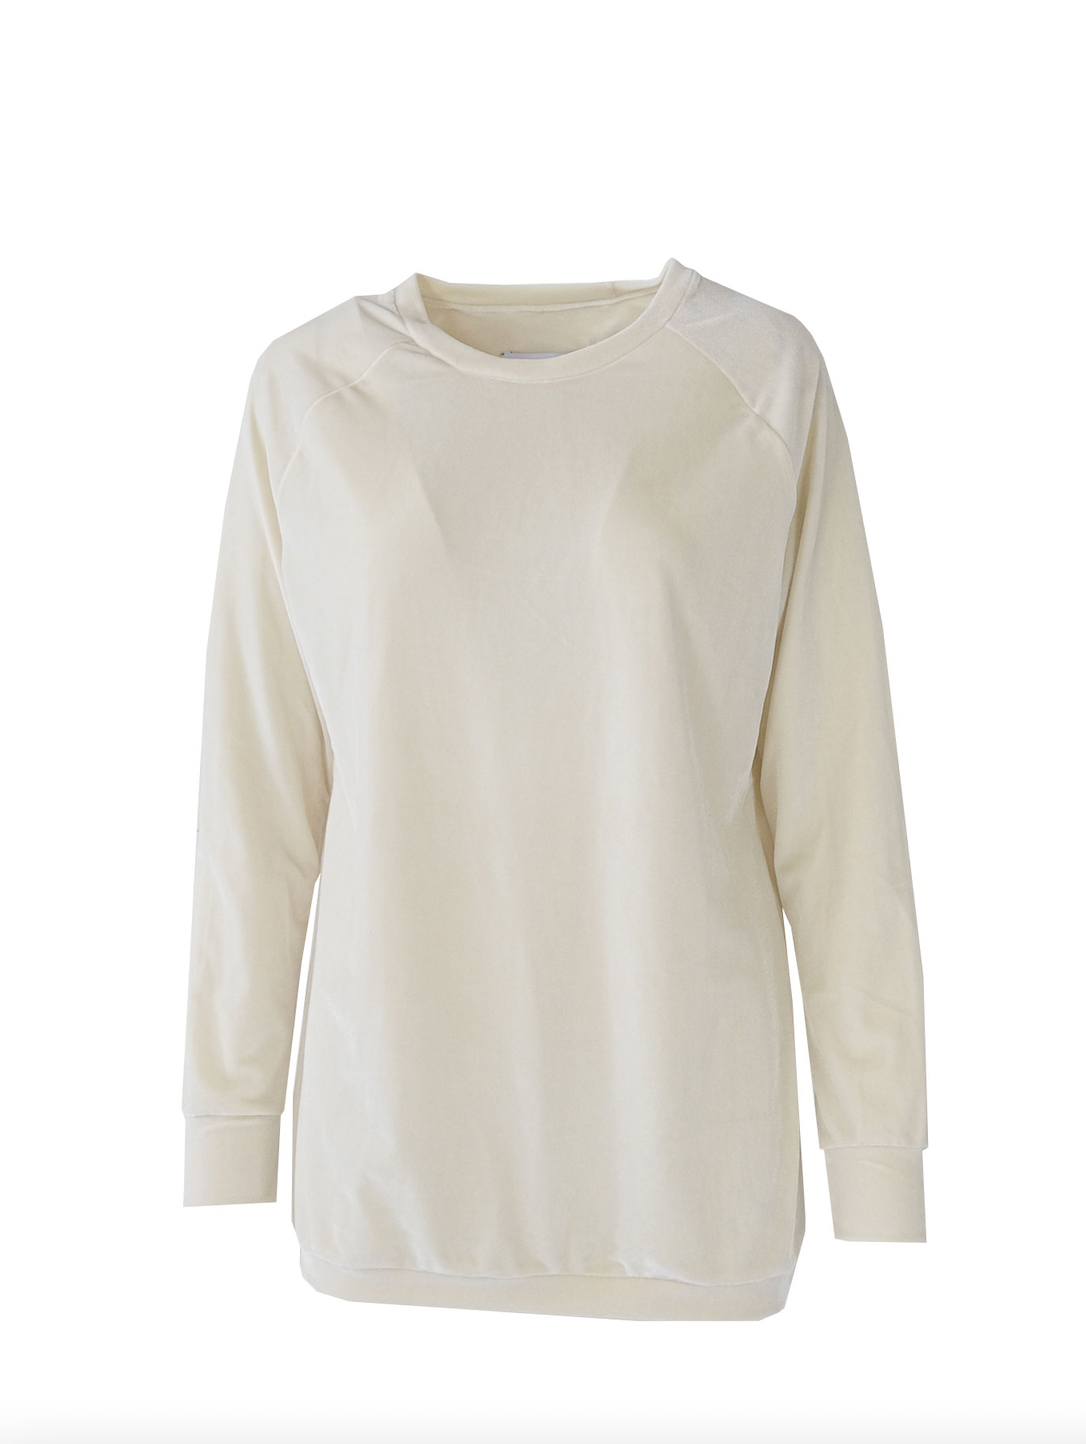 FLORA - round-necked blouse in cream chenille